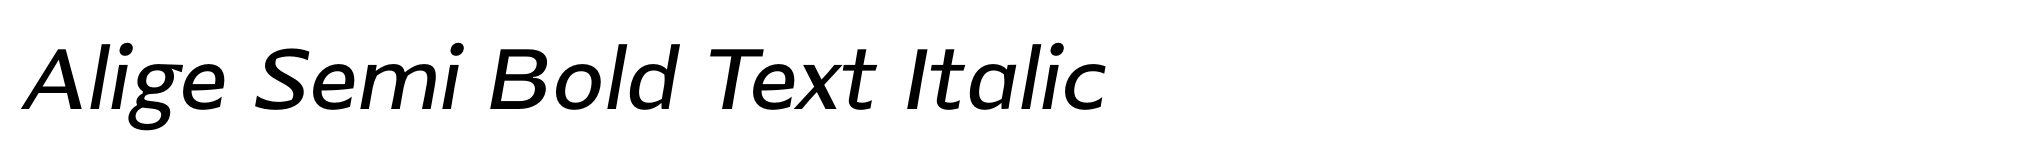 Alige Semi Bold Text Italic image